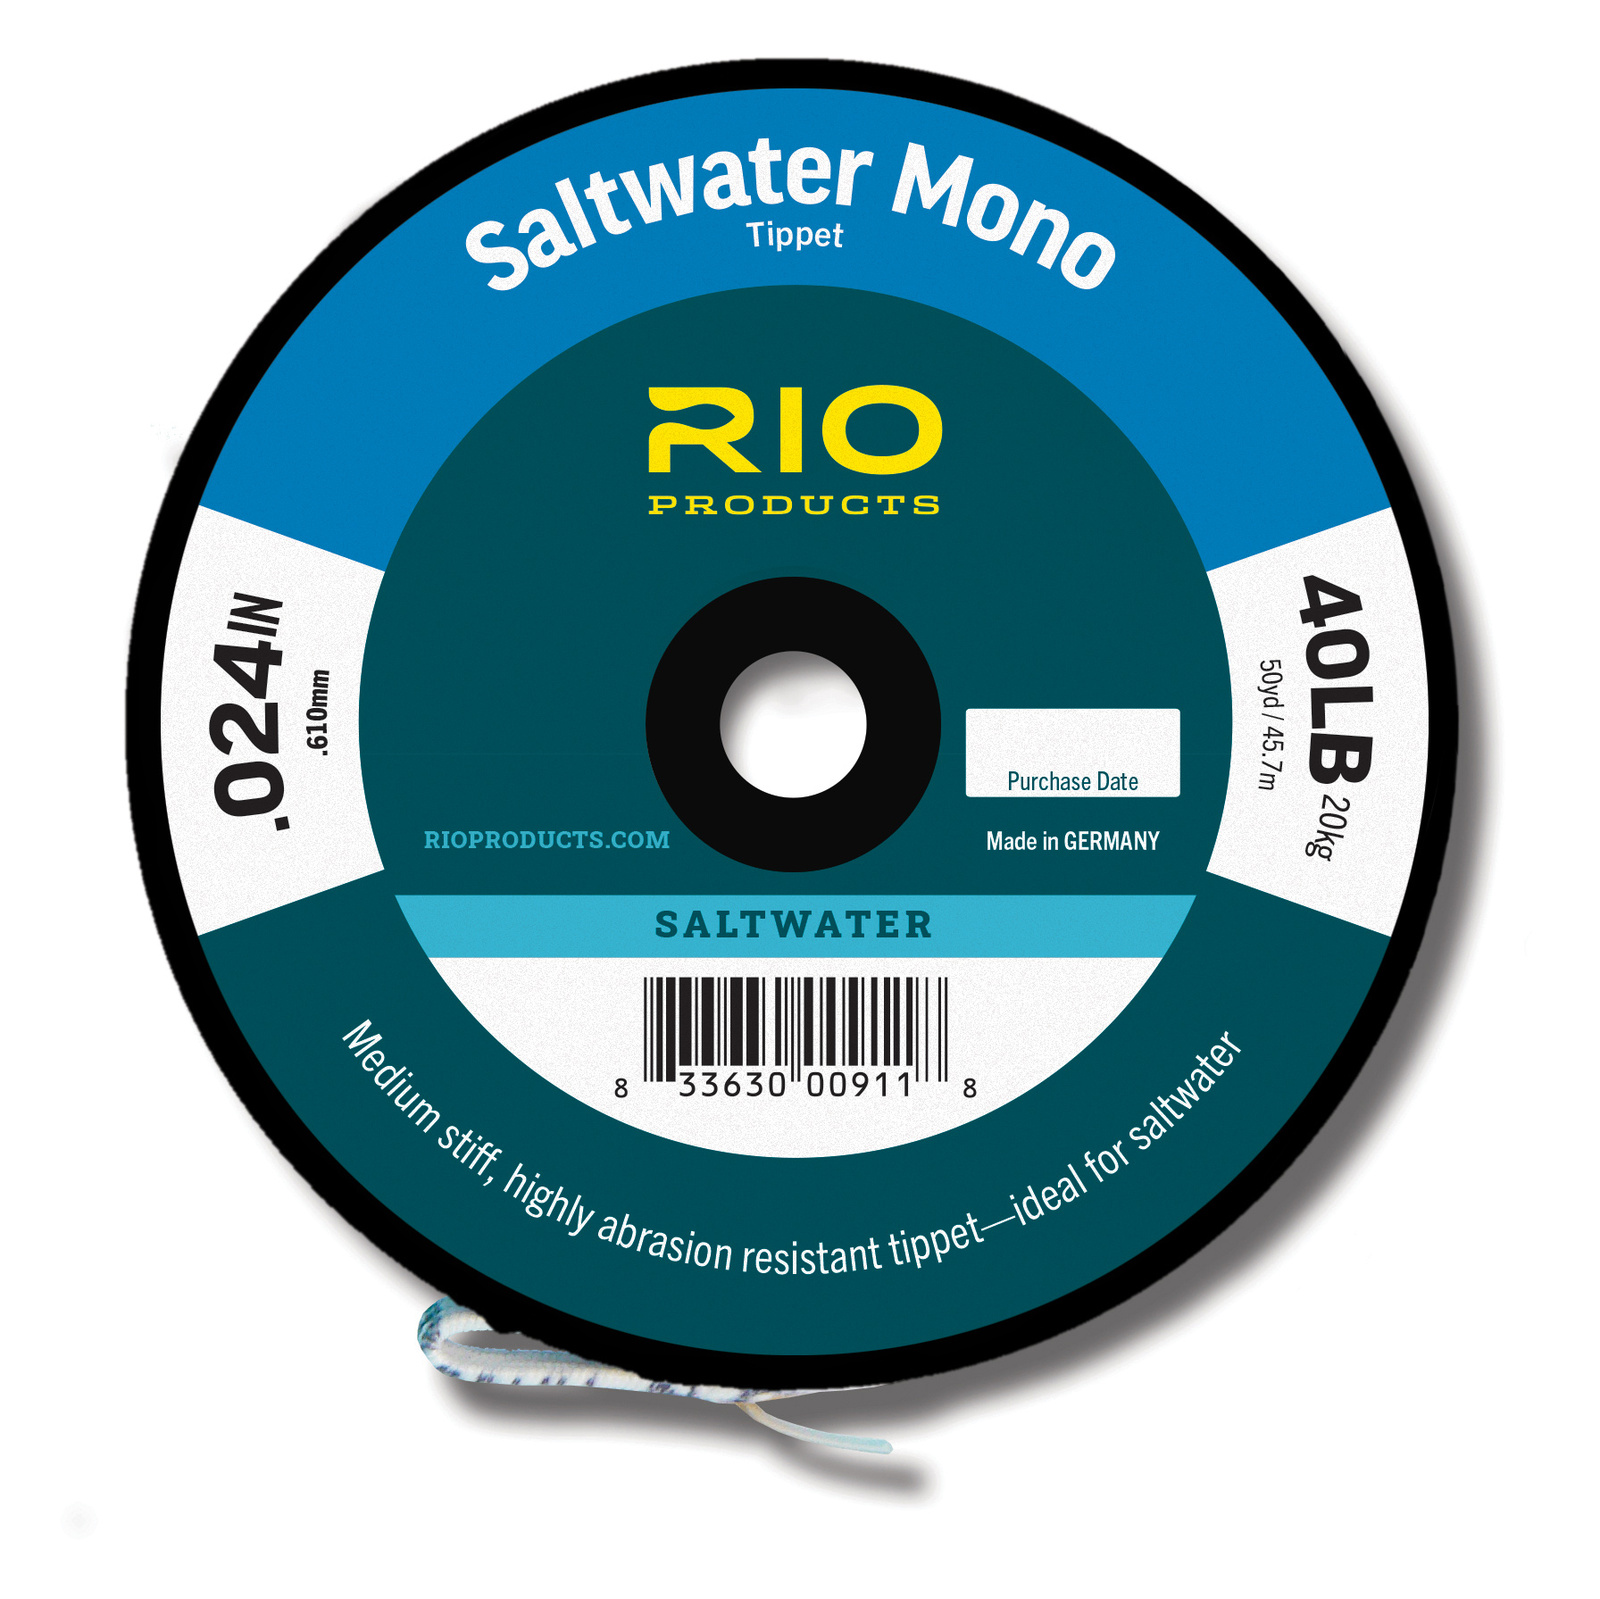 Rio Saltwater Saltwater Mono Tippet